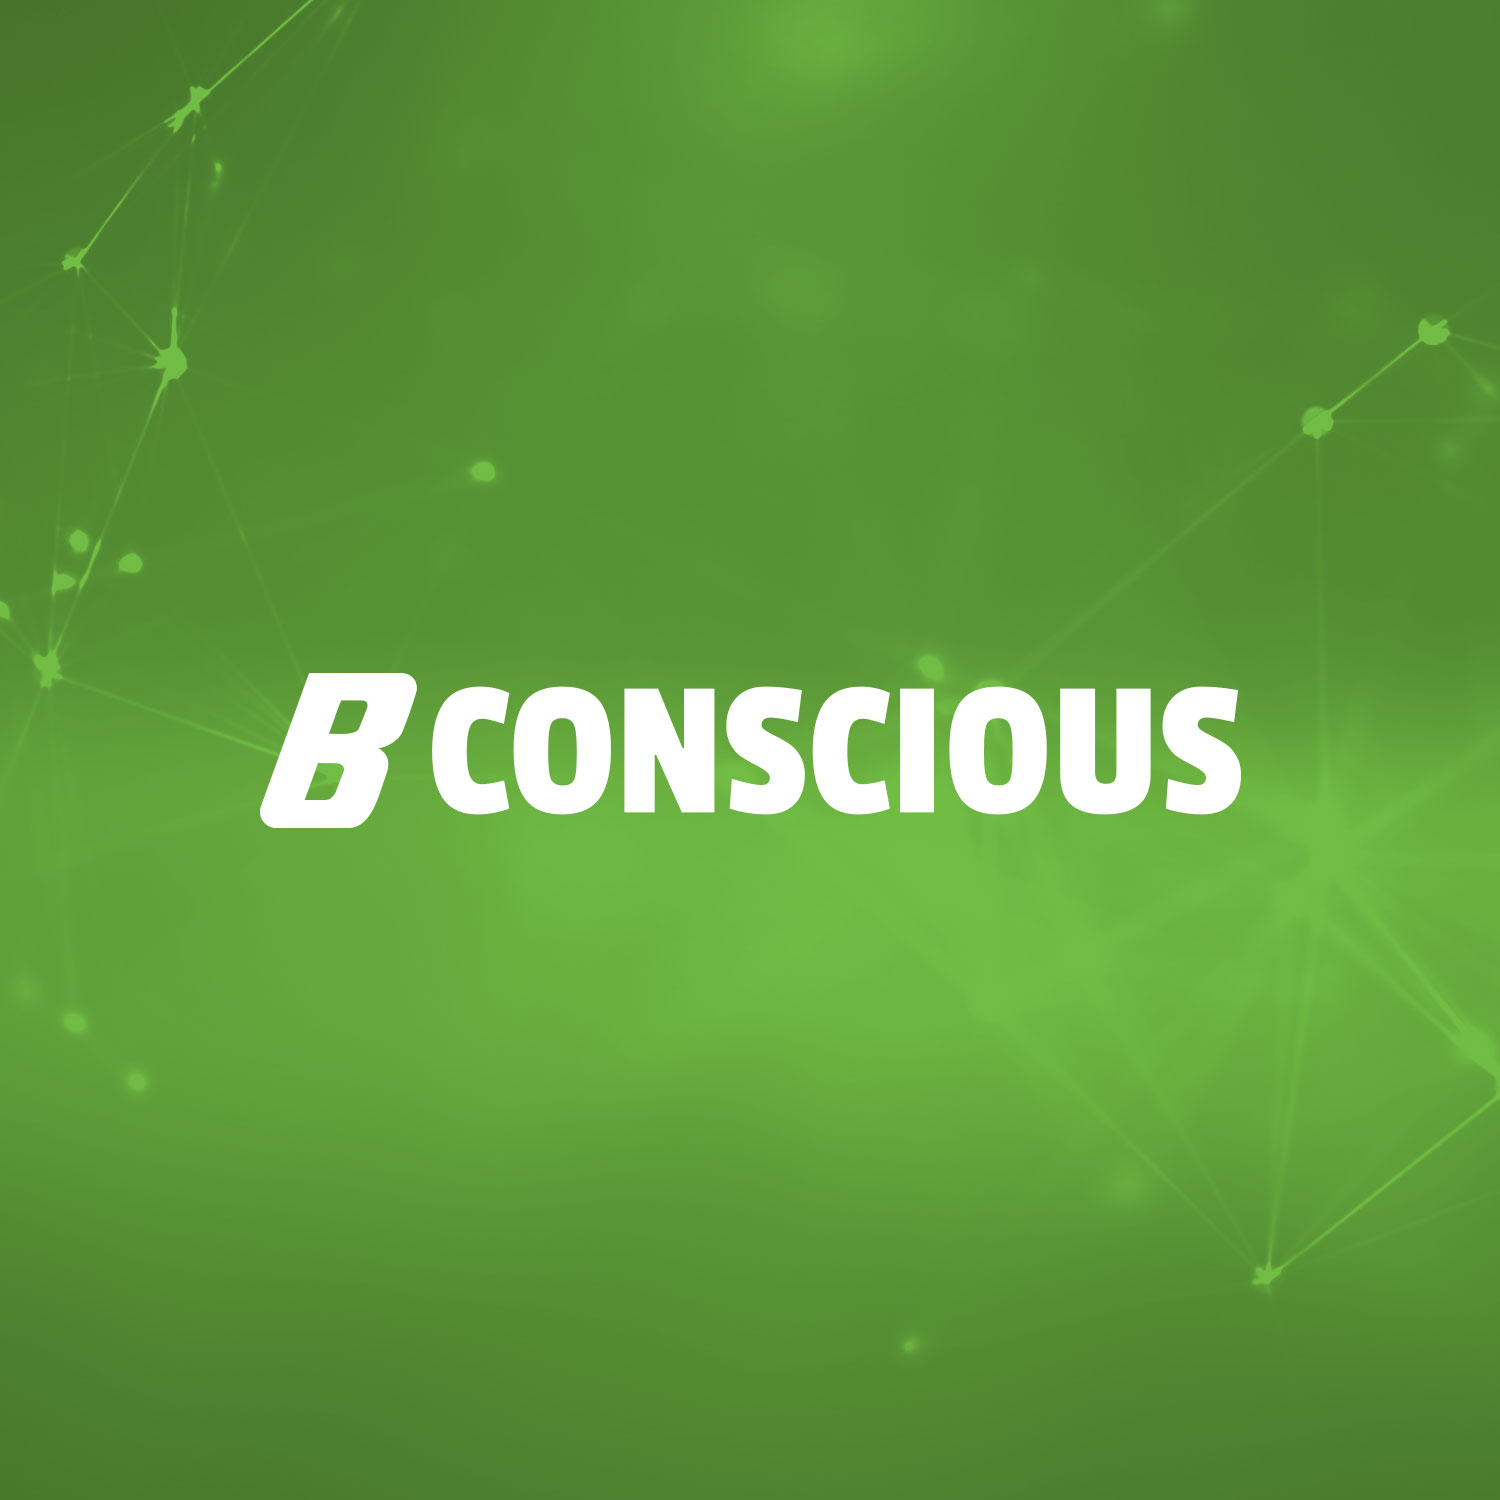 B Conscious